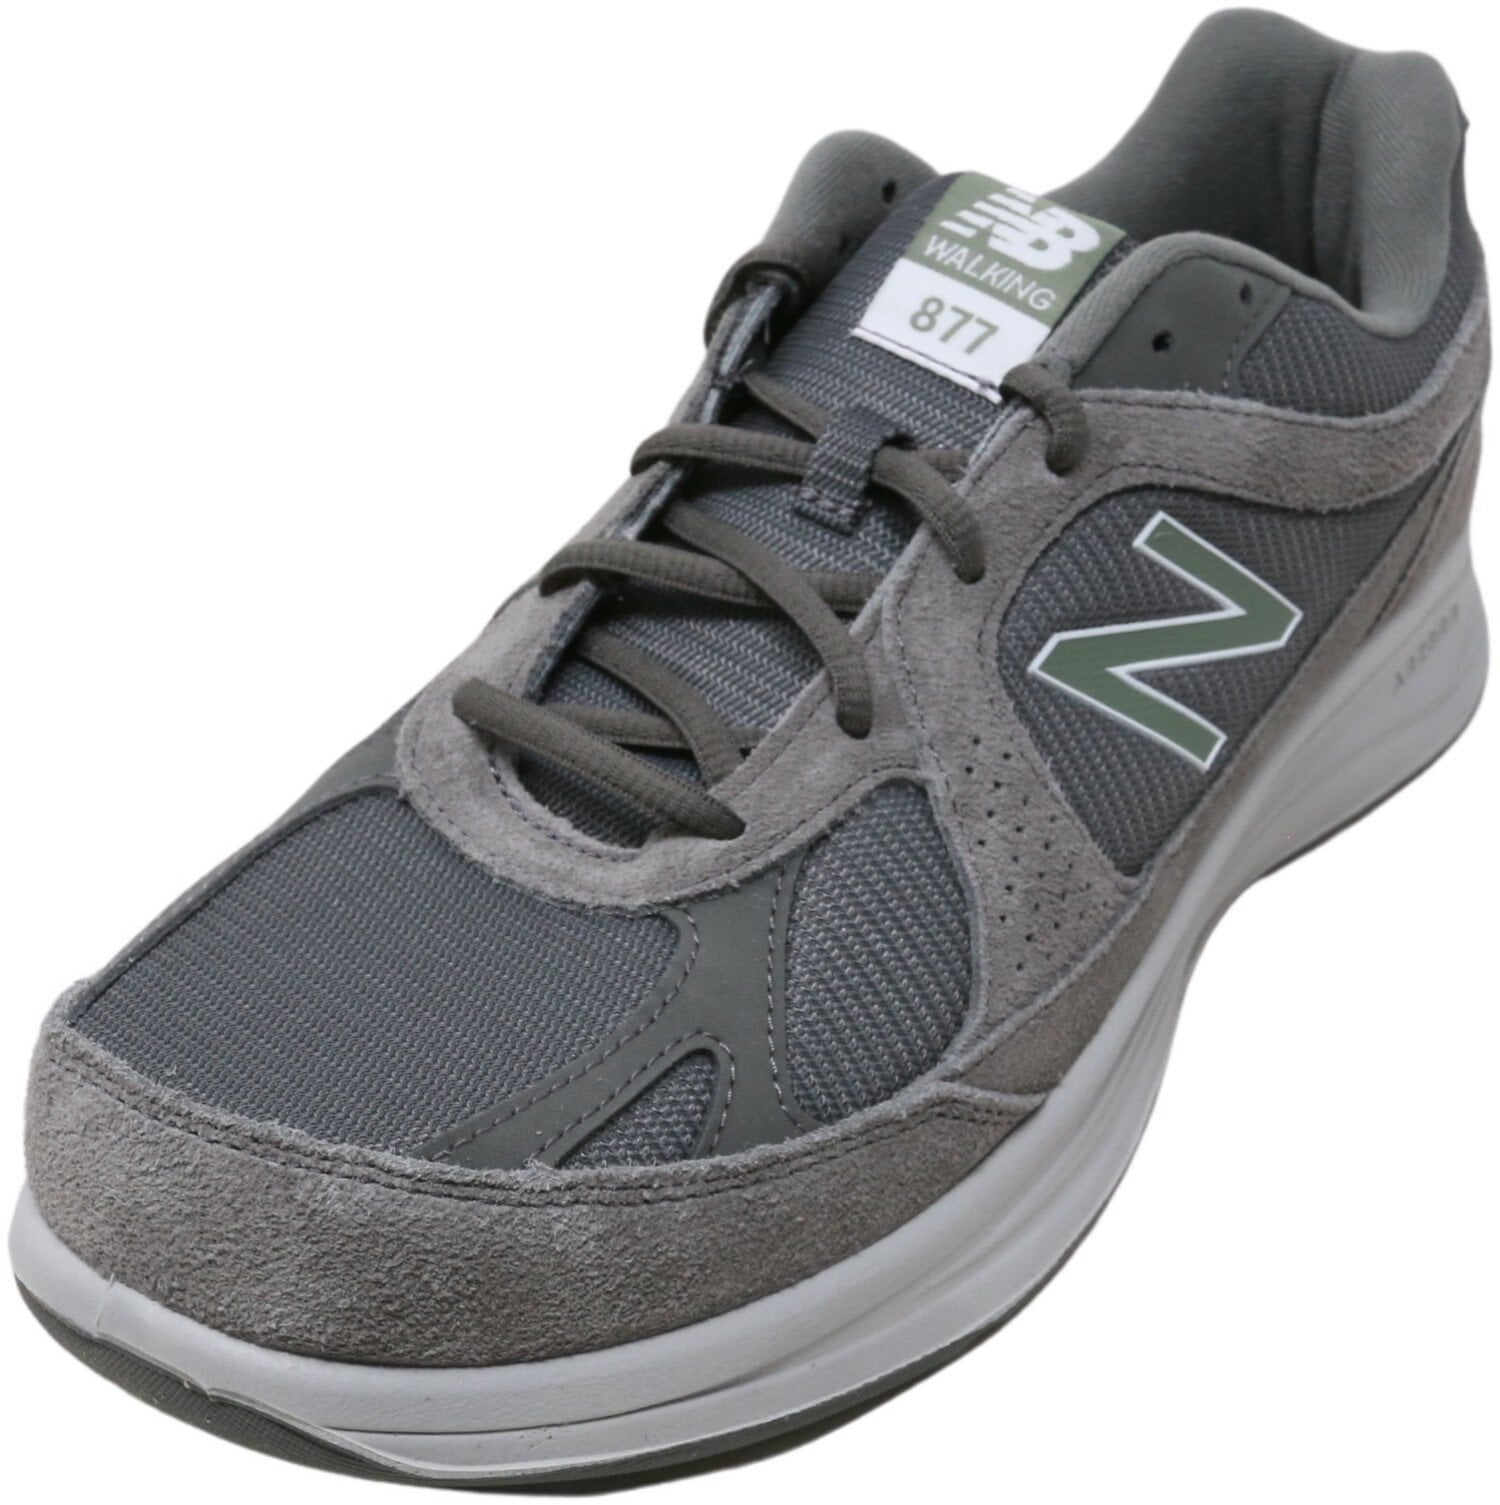 new balance men's mw877 walking shoe